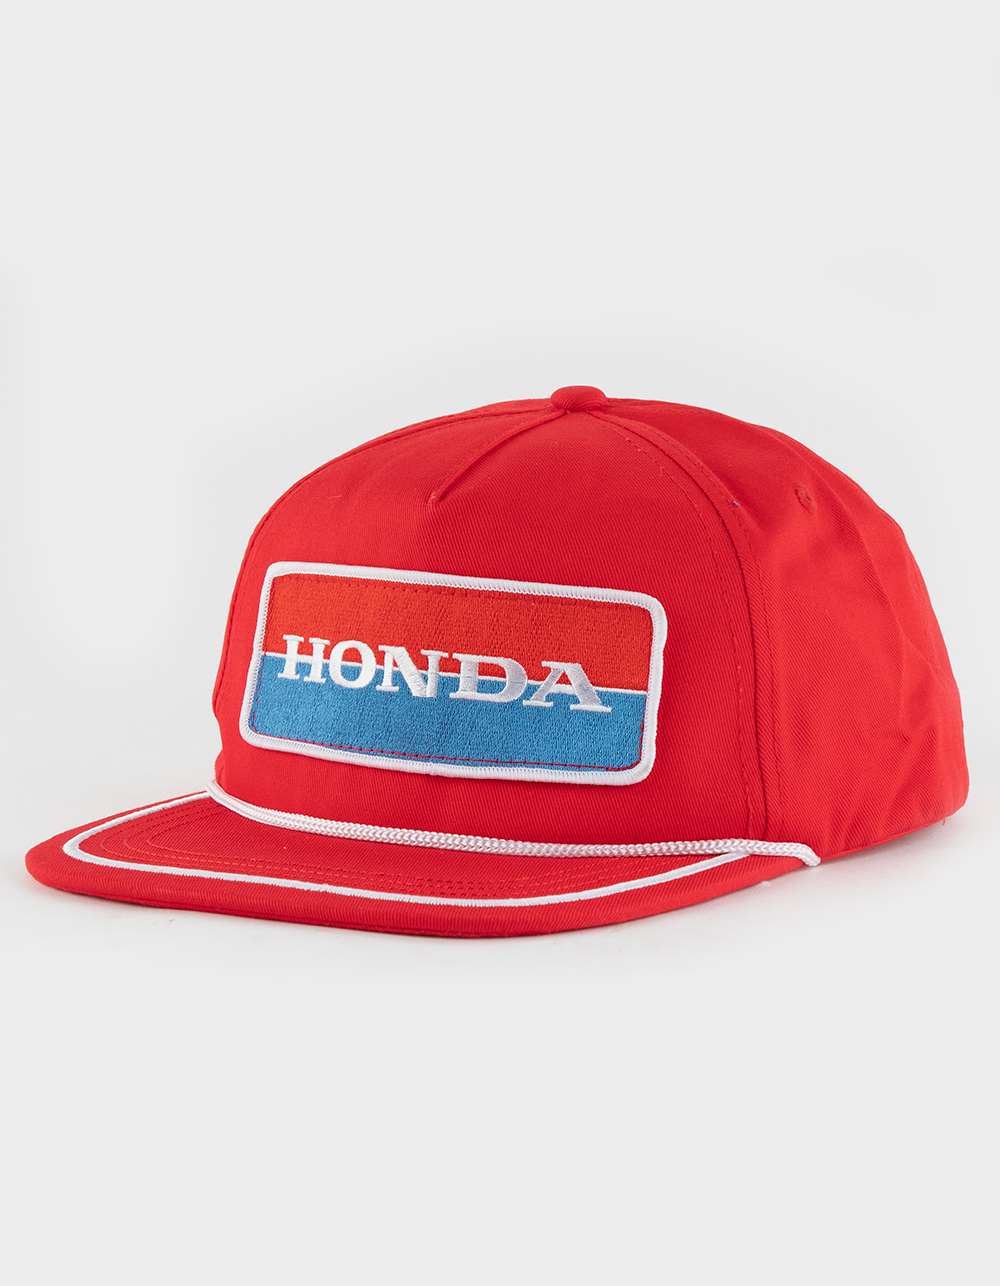 HONDA Ace Mens Snapback Hat - RED